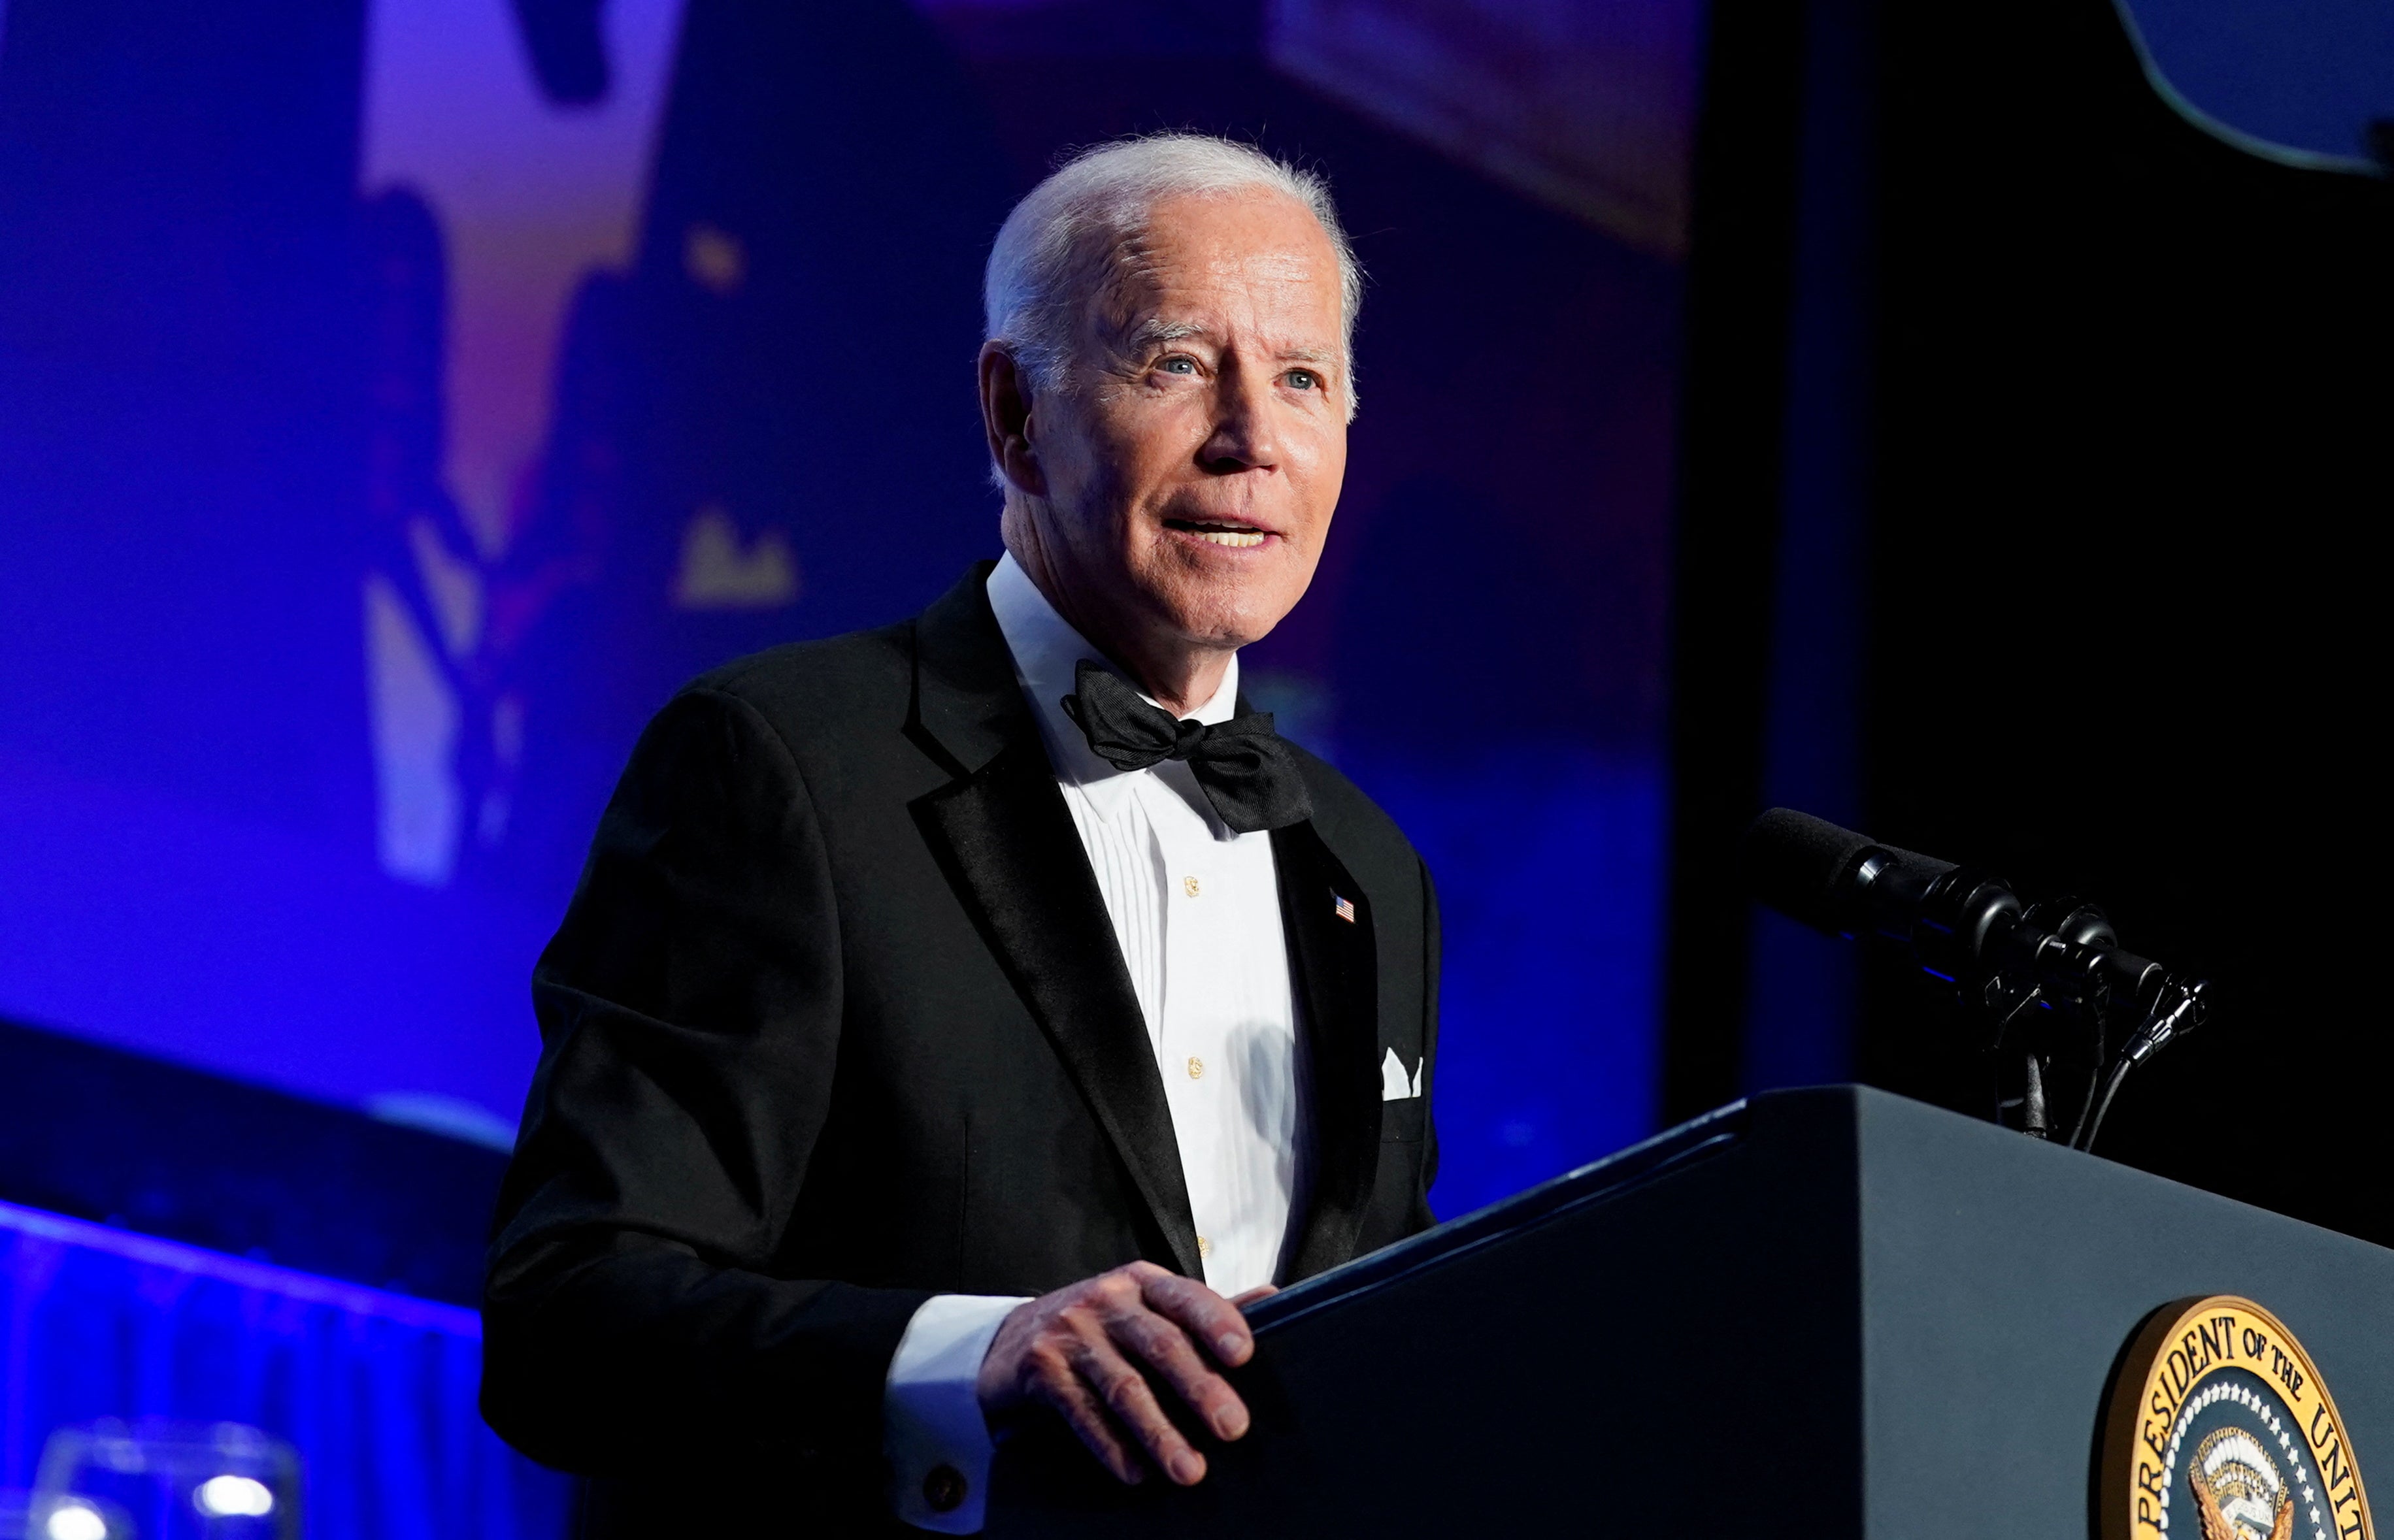 Joe Biden speaks during the annual White House Correspondents’ Association dinner in Washington